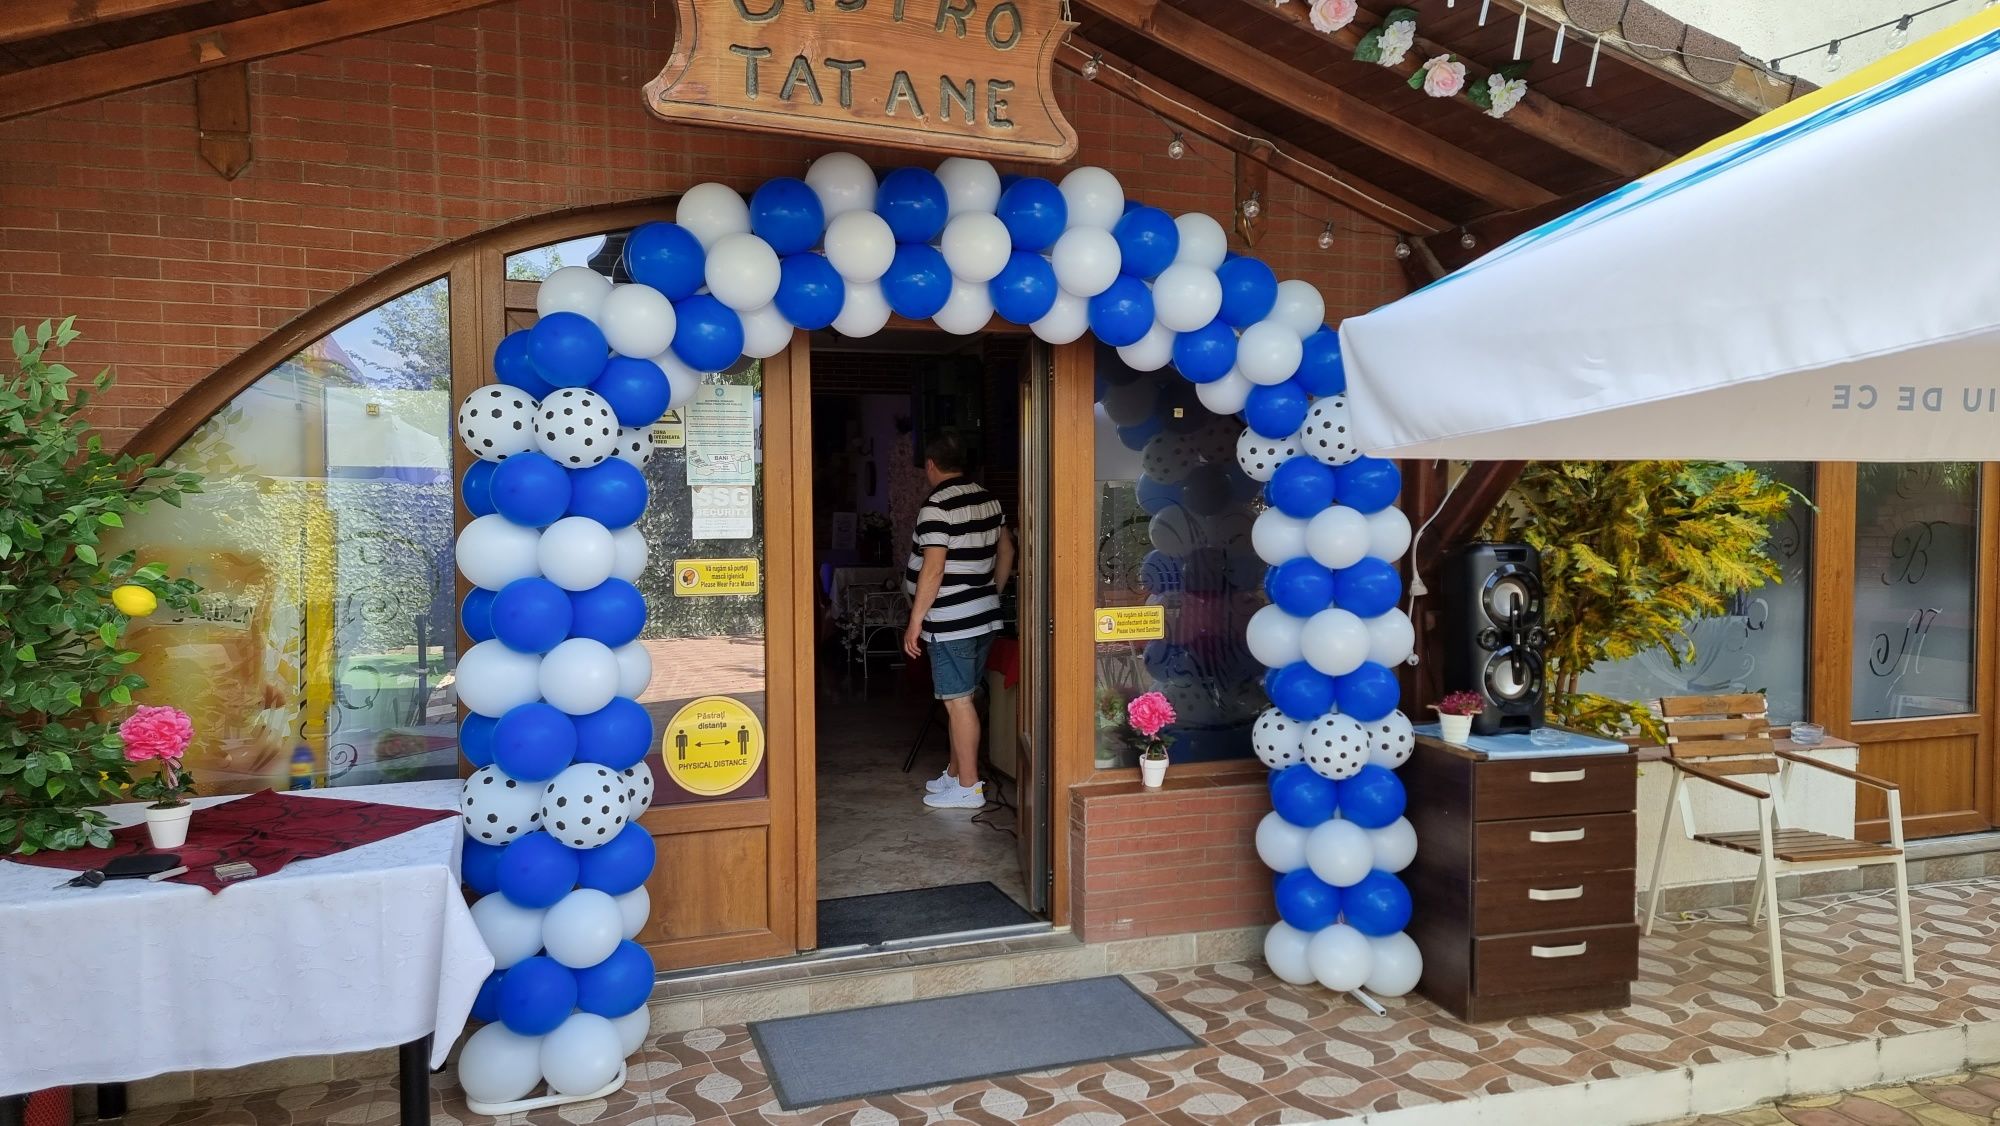 Arcade din Baloane deschideri magazin, diferite evenimente